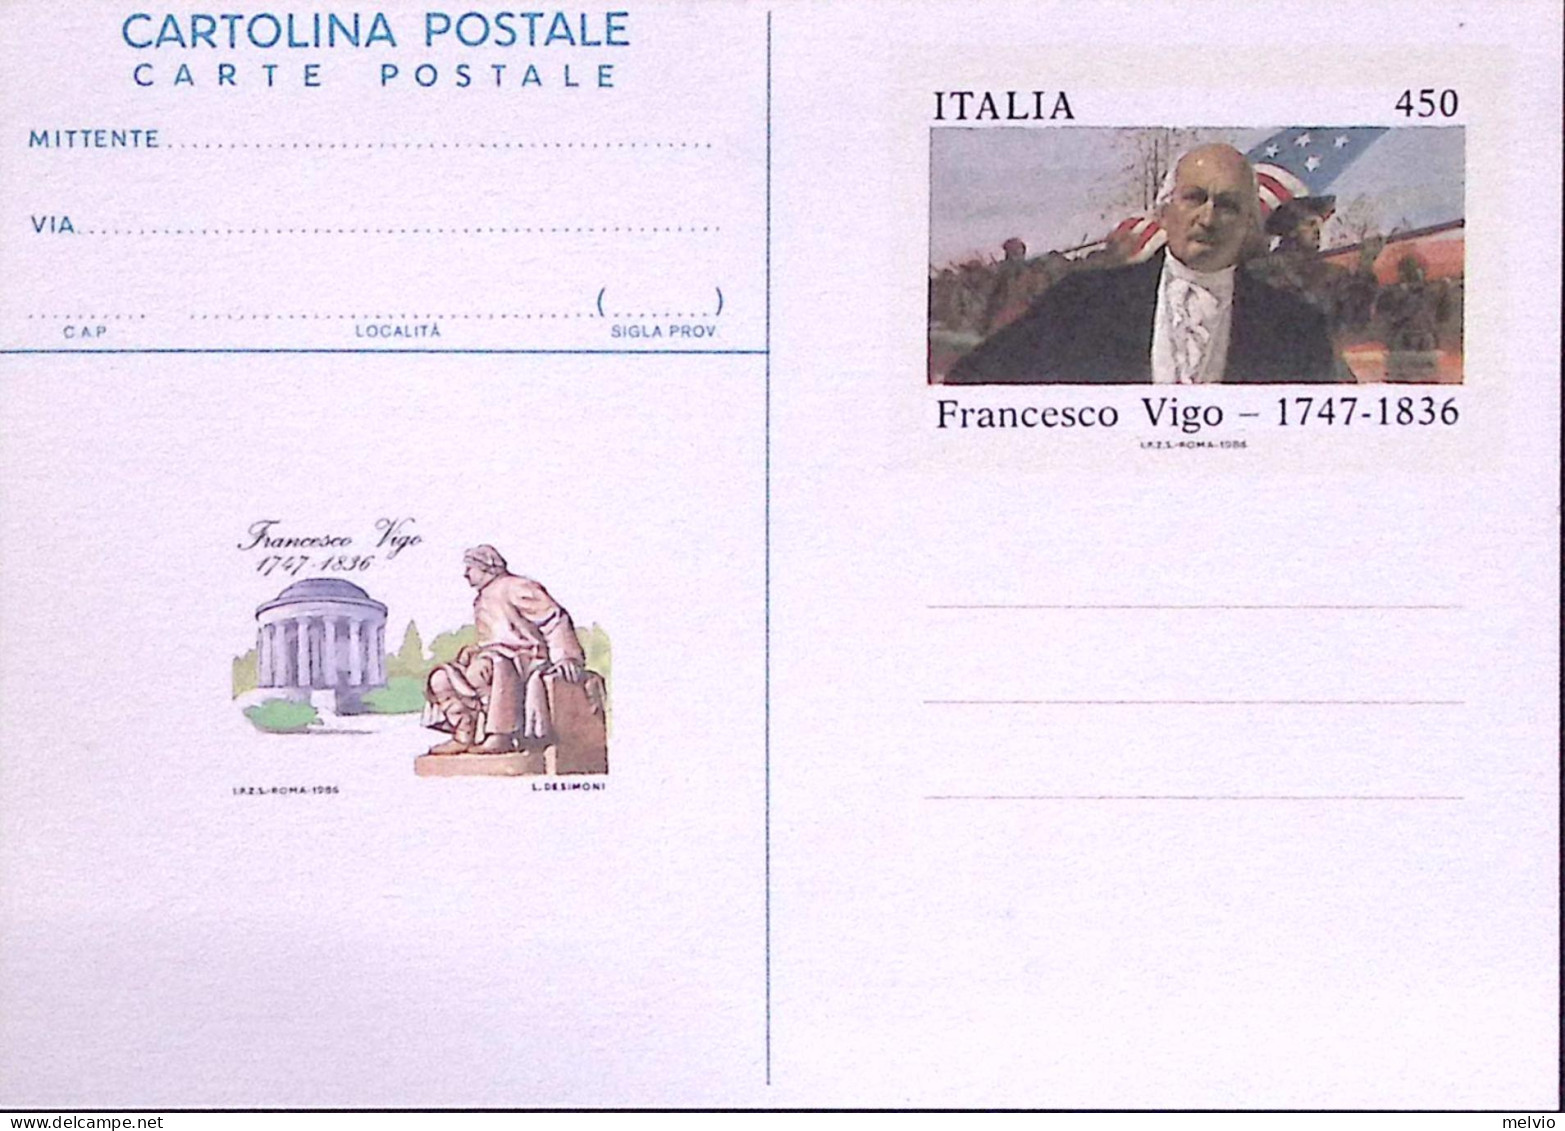 1986-Cartolina Postale Lire 450 Francesco Vigo Nuova - Stamped Stationery